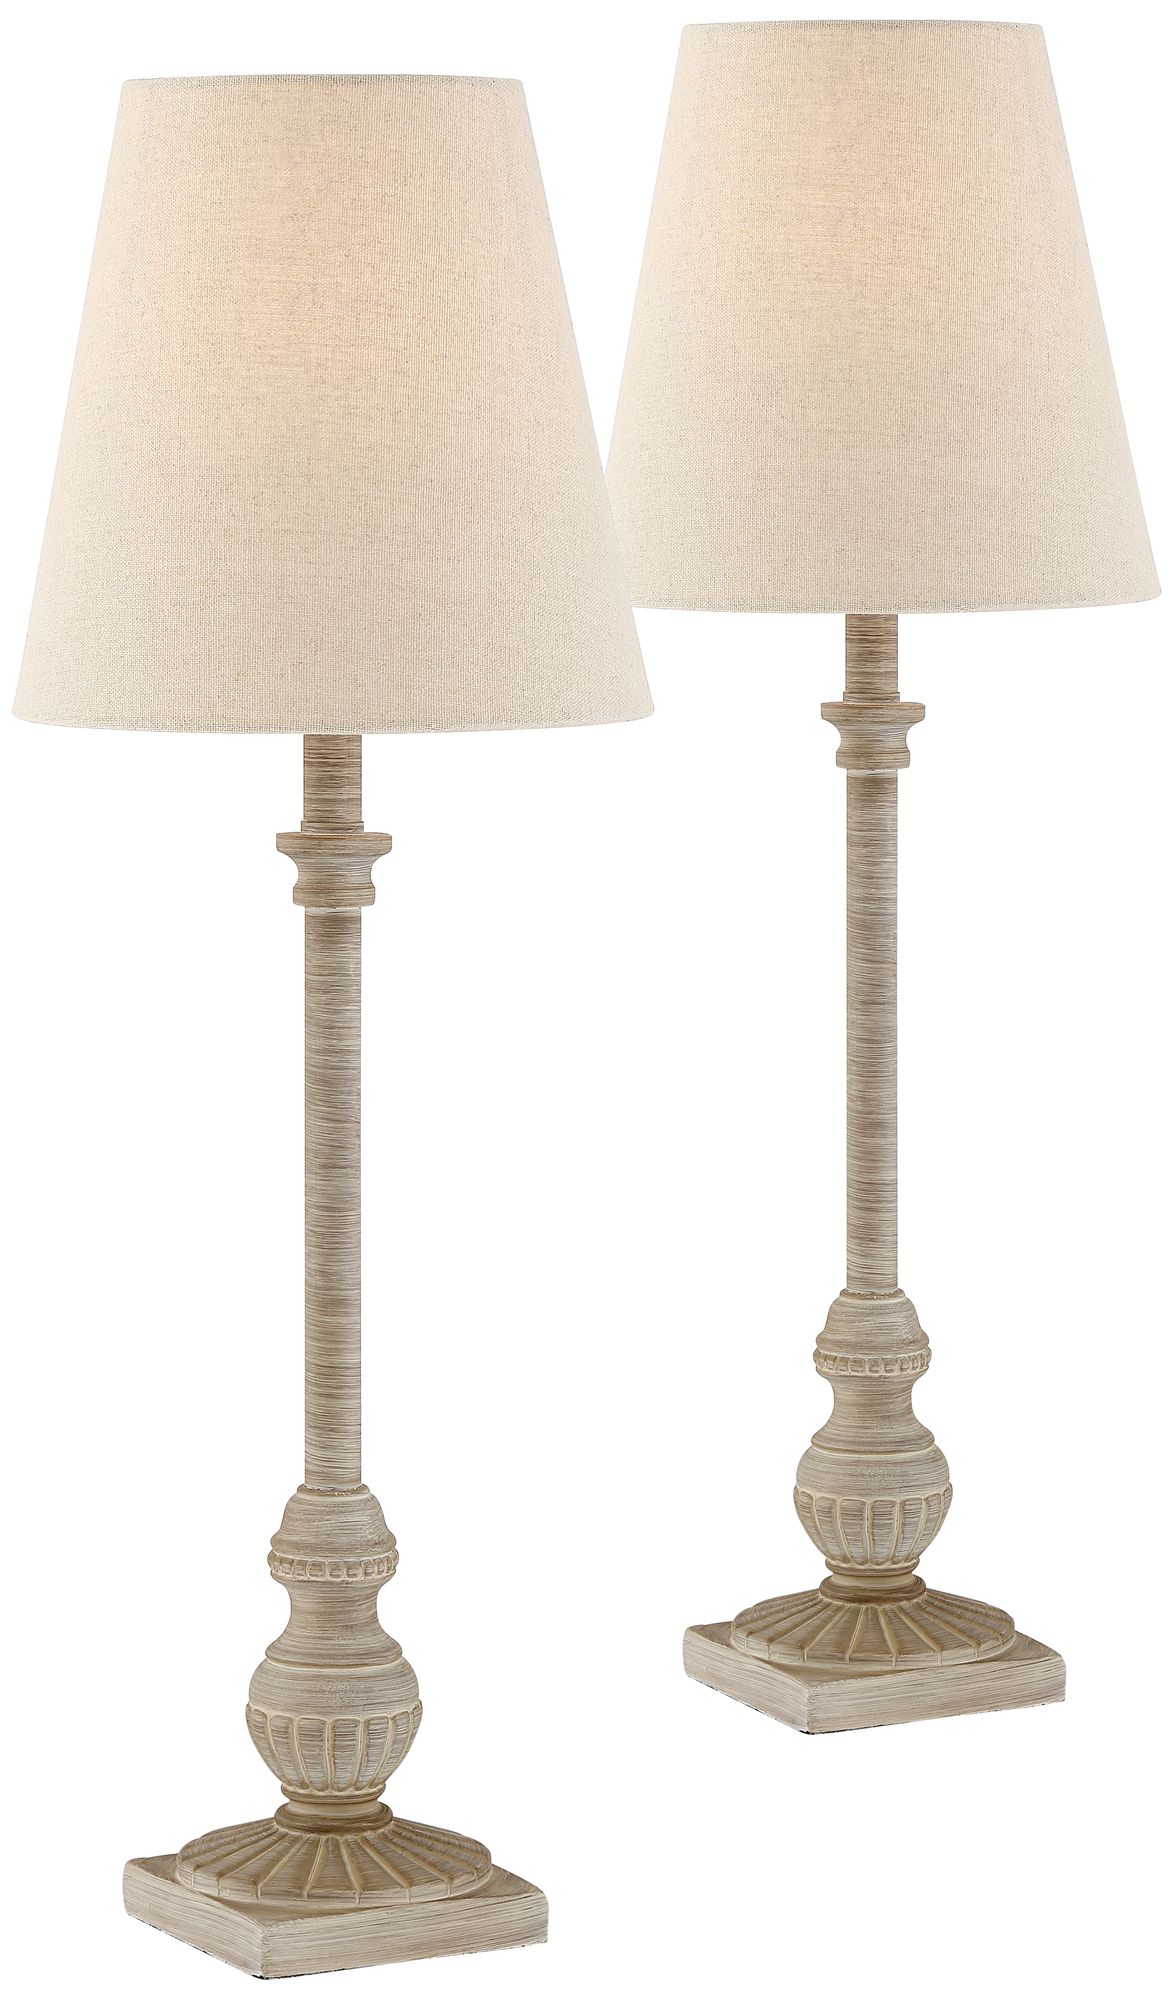 Loreno Whitewash Buffet Lamps Set of 2